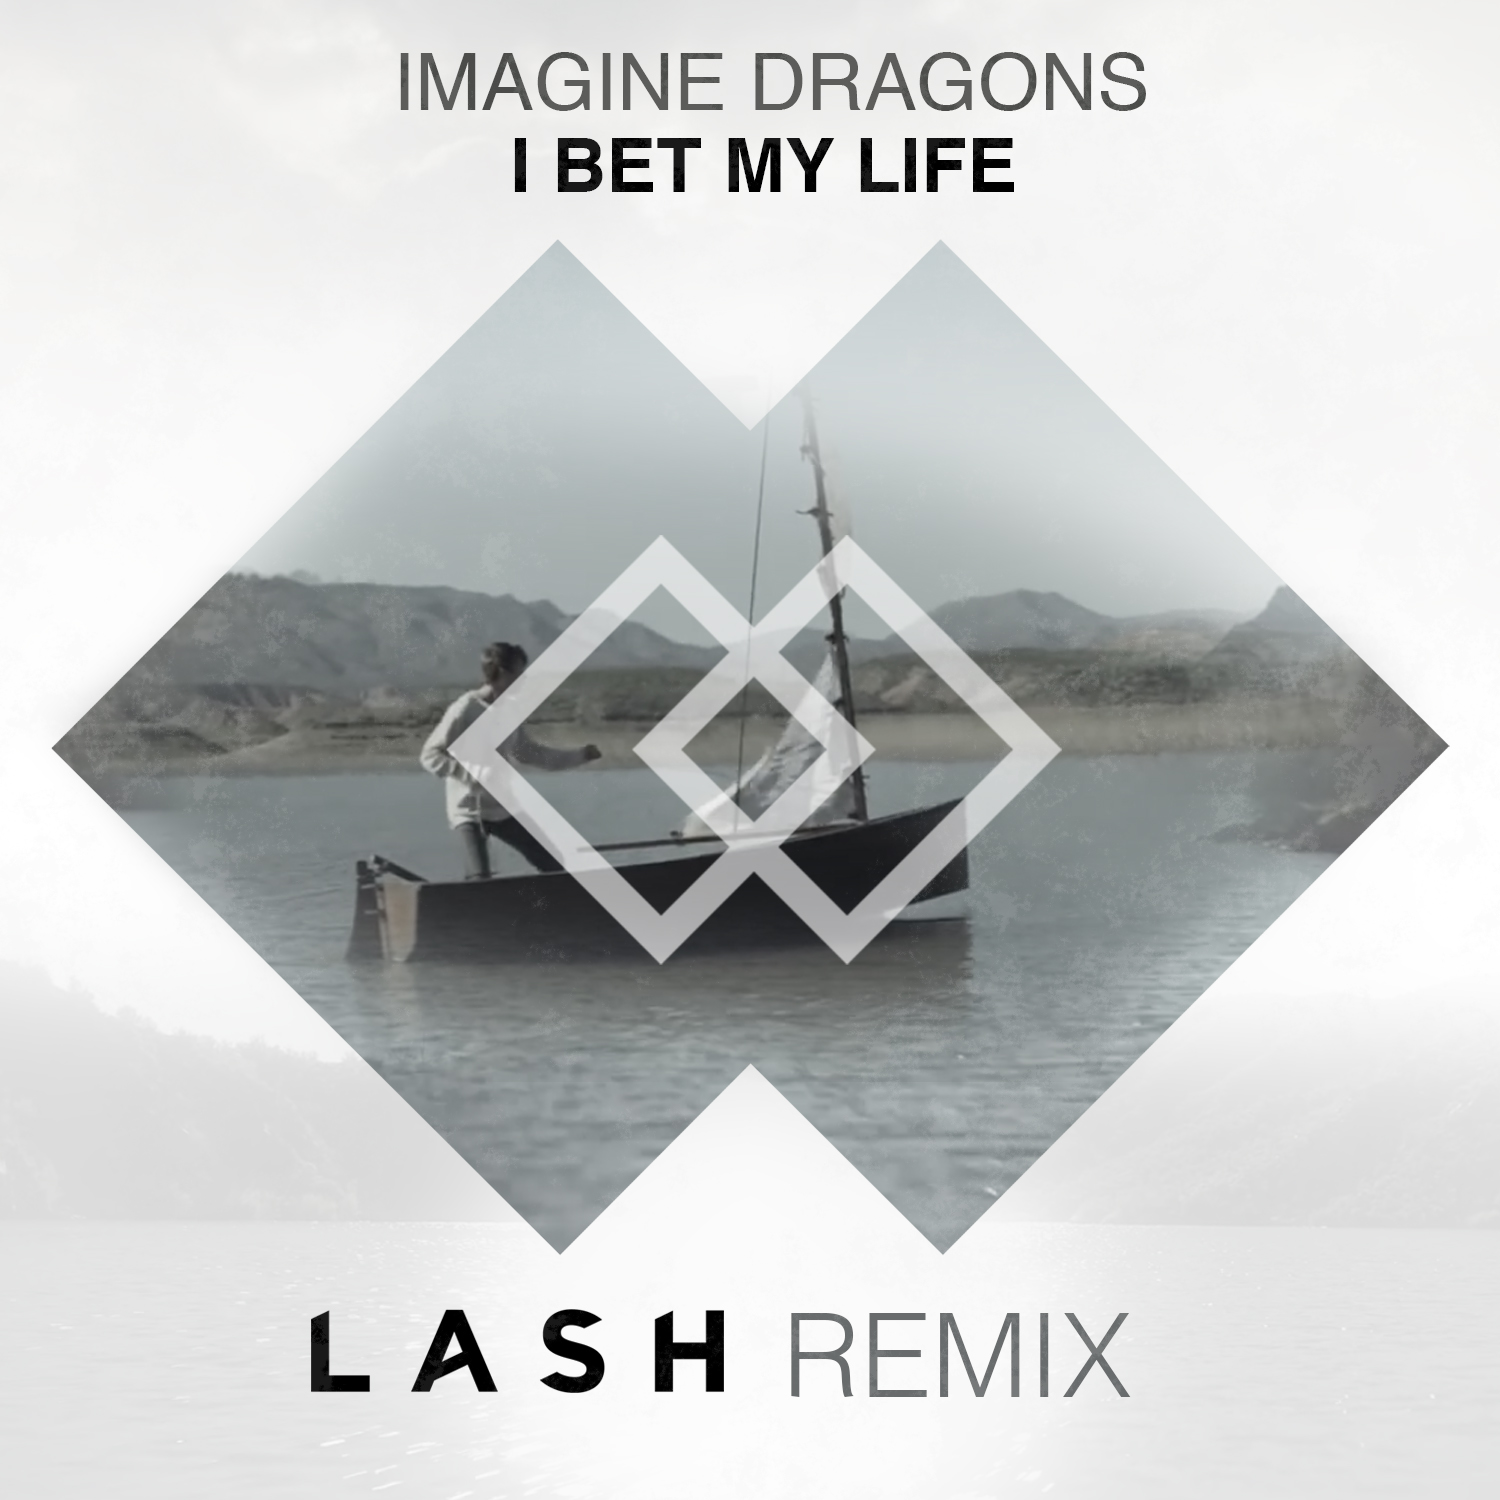 Lonely imagine. Imagine the Remixes.